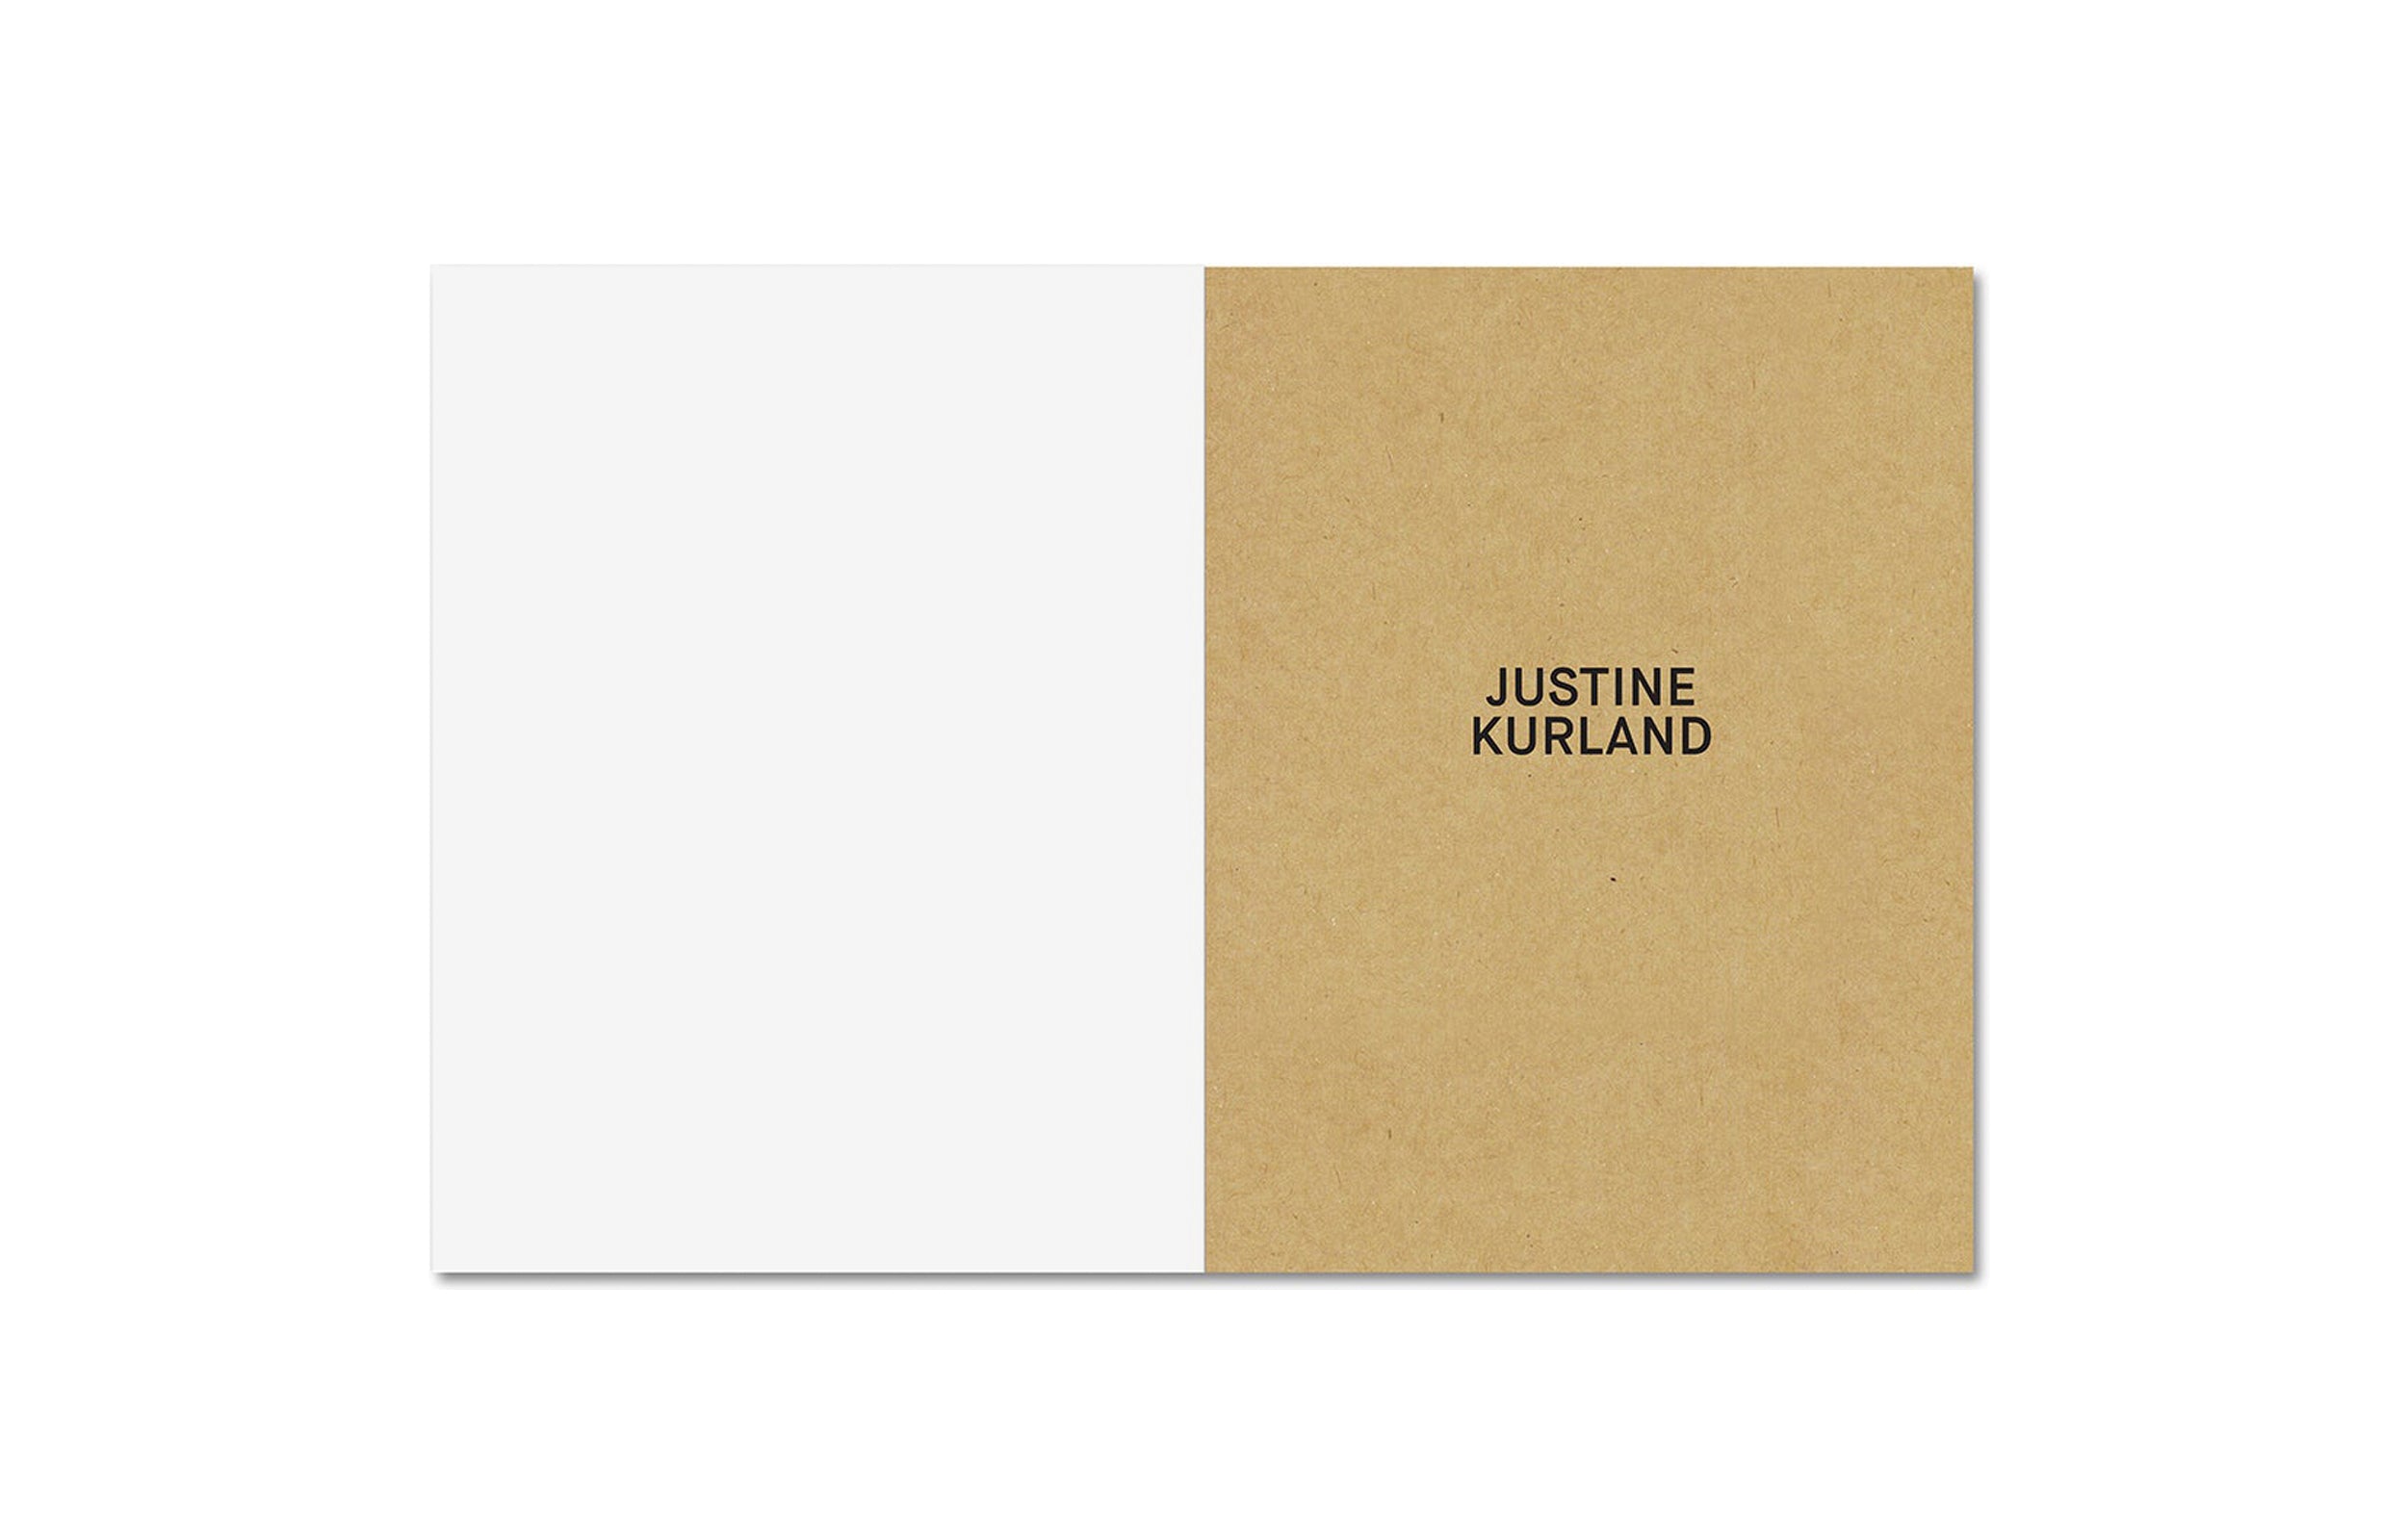 SCUMB MANIFESTO by Justine Kurland